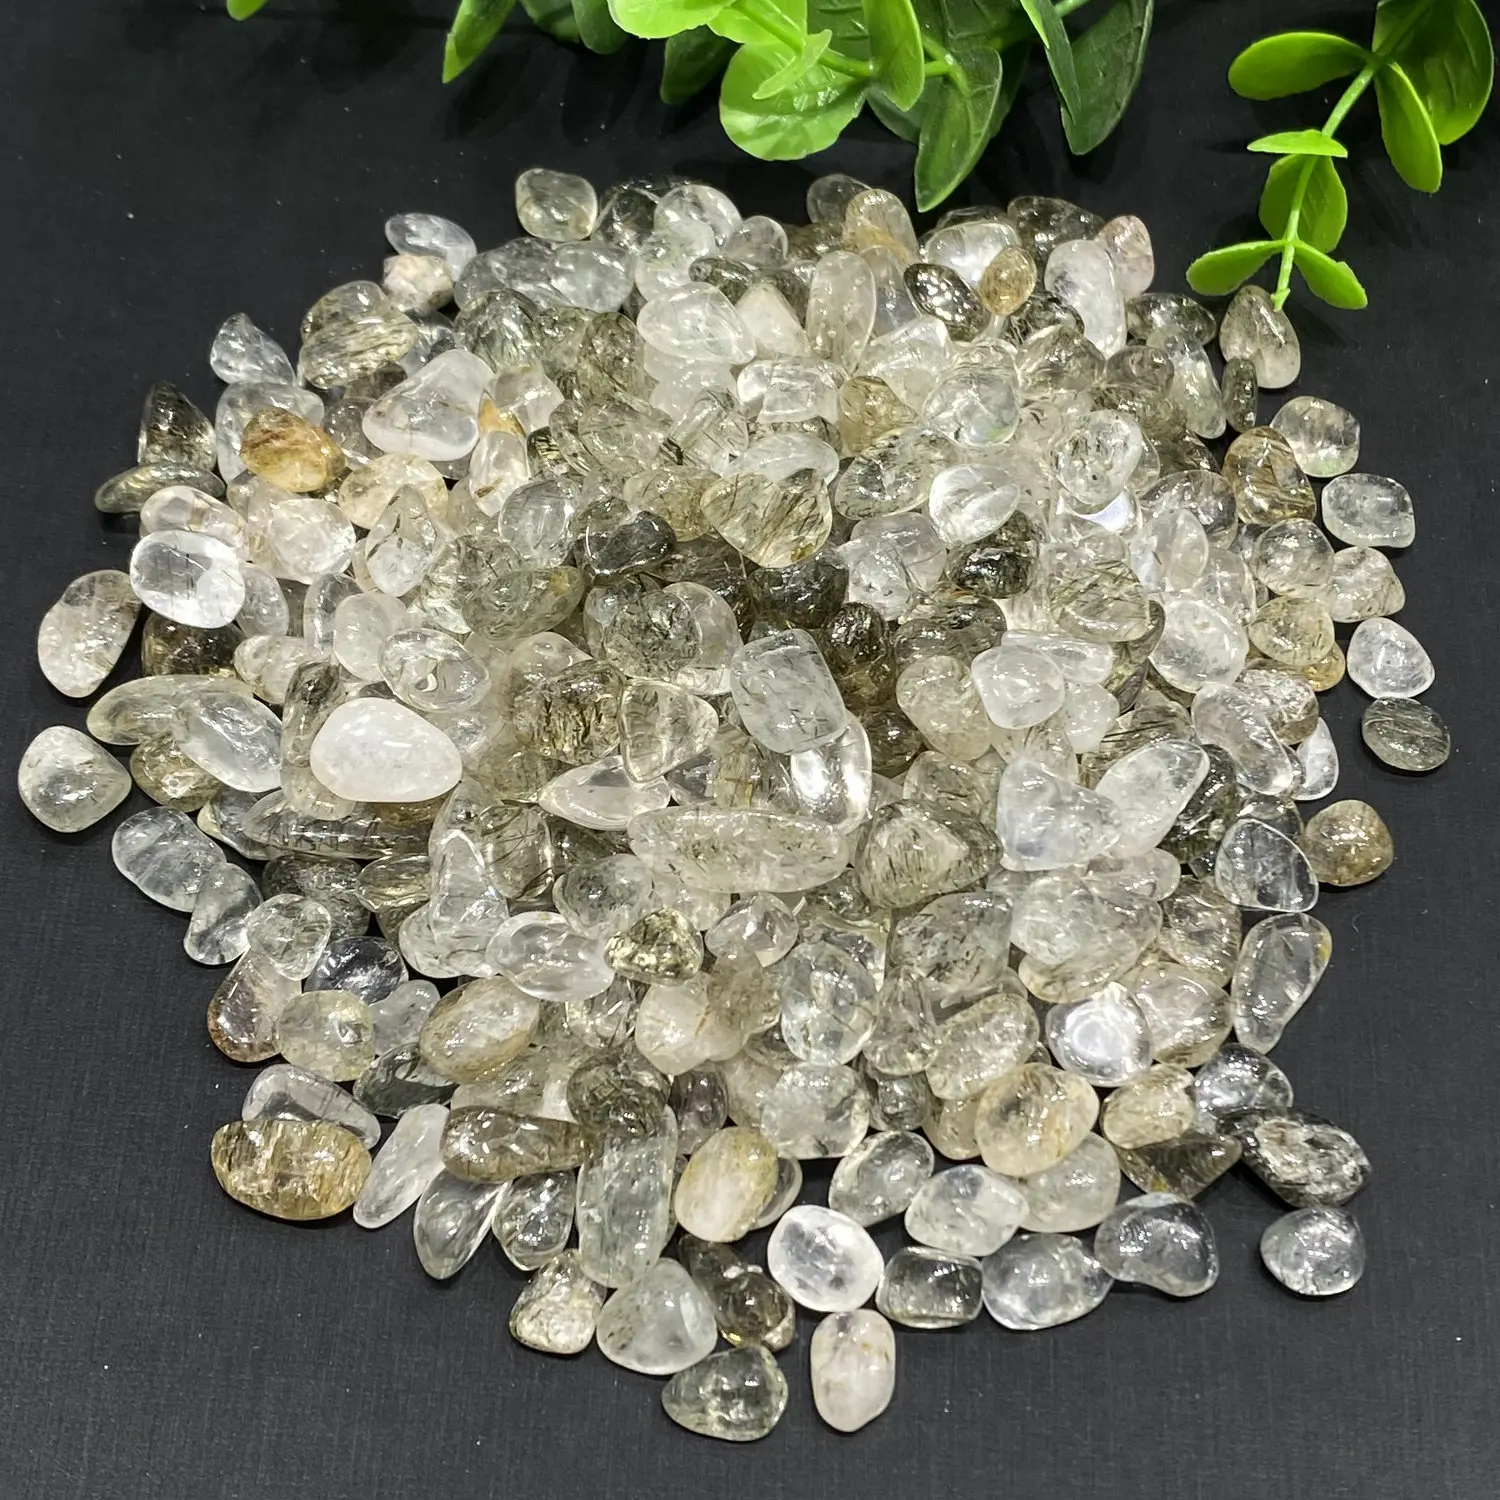 5-10mm 100g Natural Rutilated Quartz Rough Mineral Healing Crystals Gem Specimens Collectible Home Decor